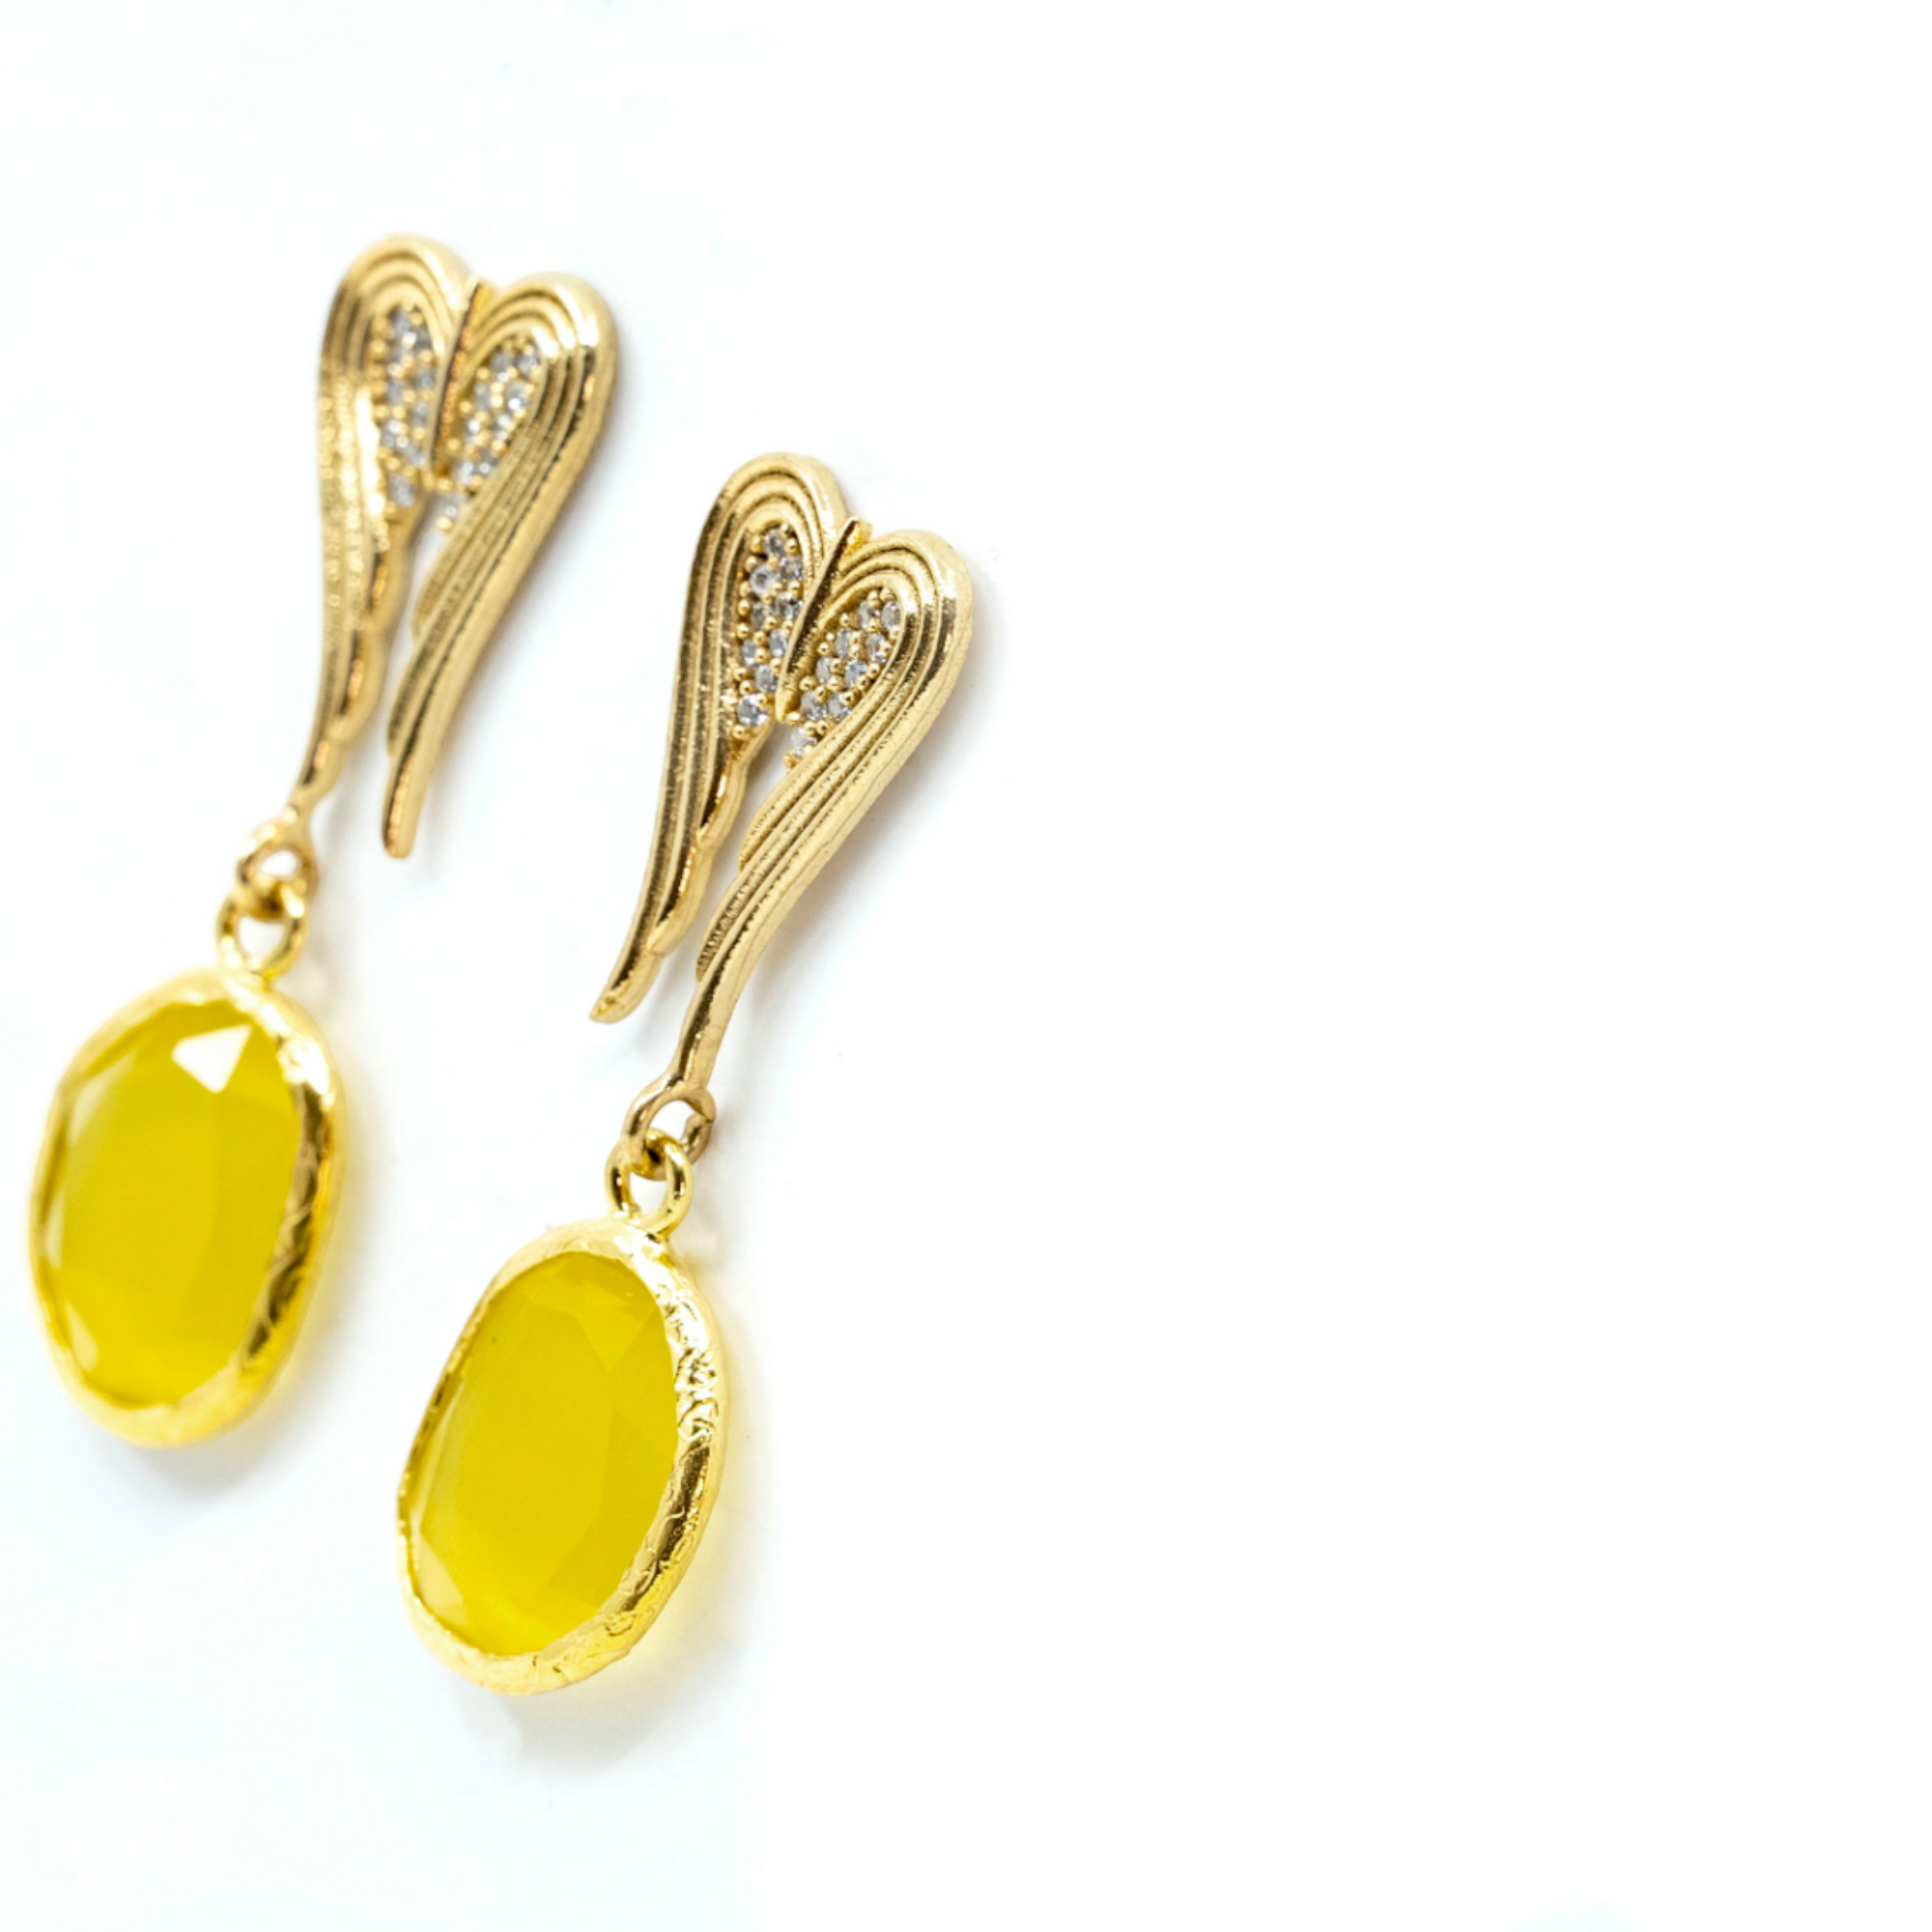 Dangling Heart Earring with Yellow Oval Stone - shopzeyzey